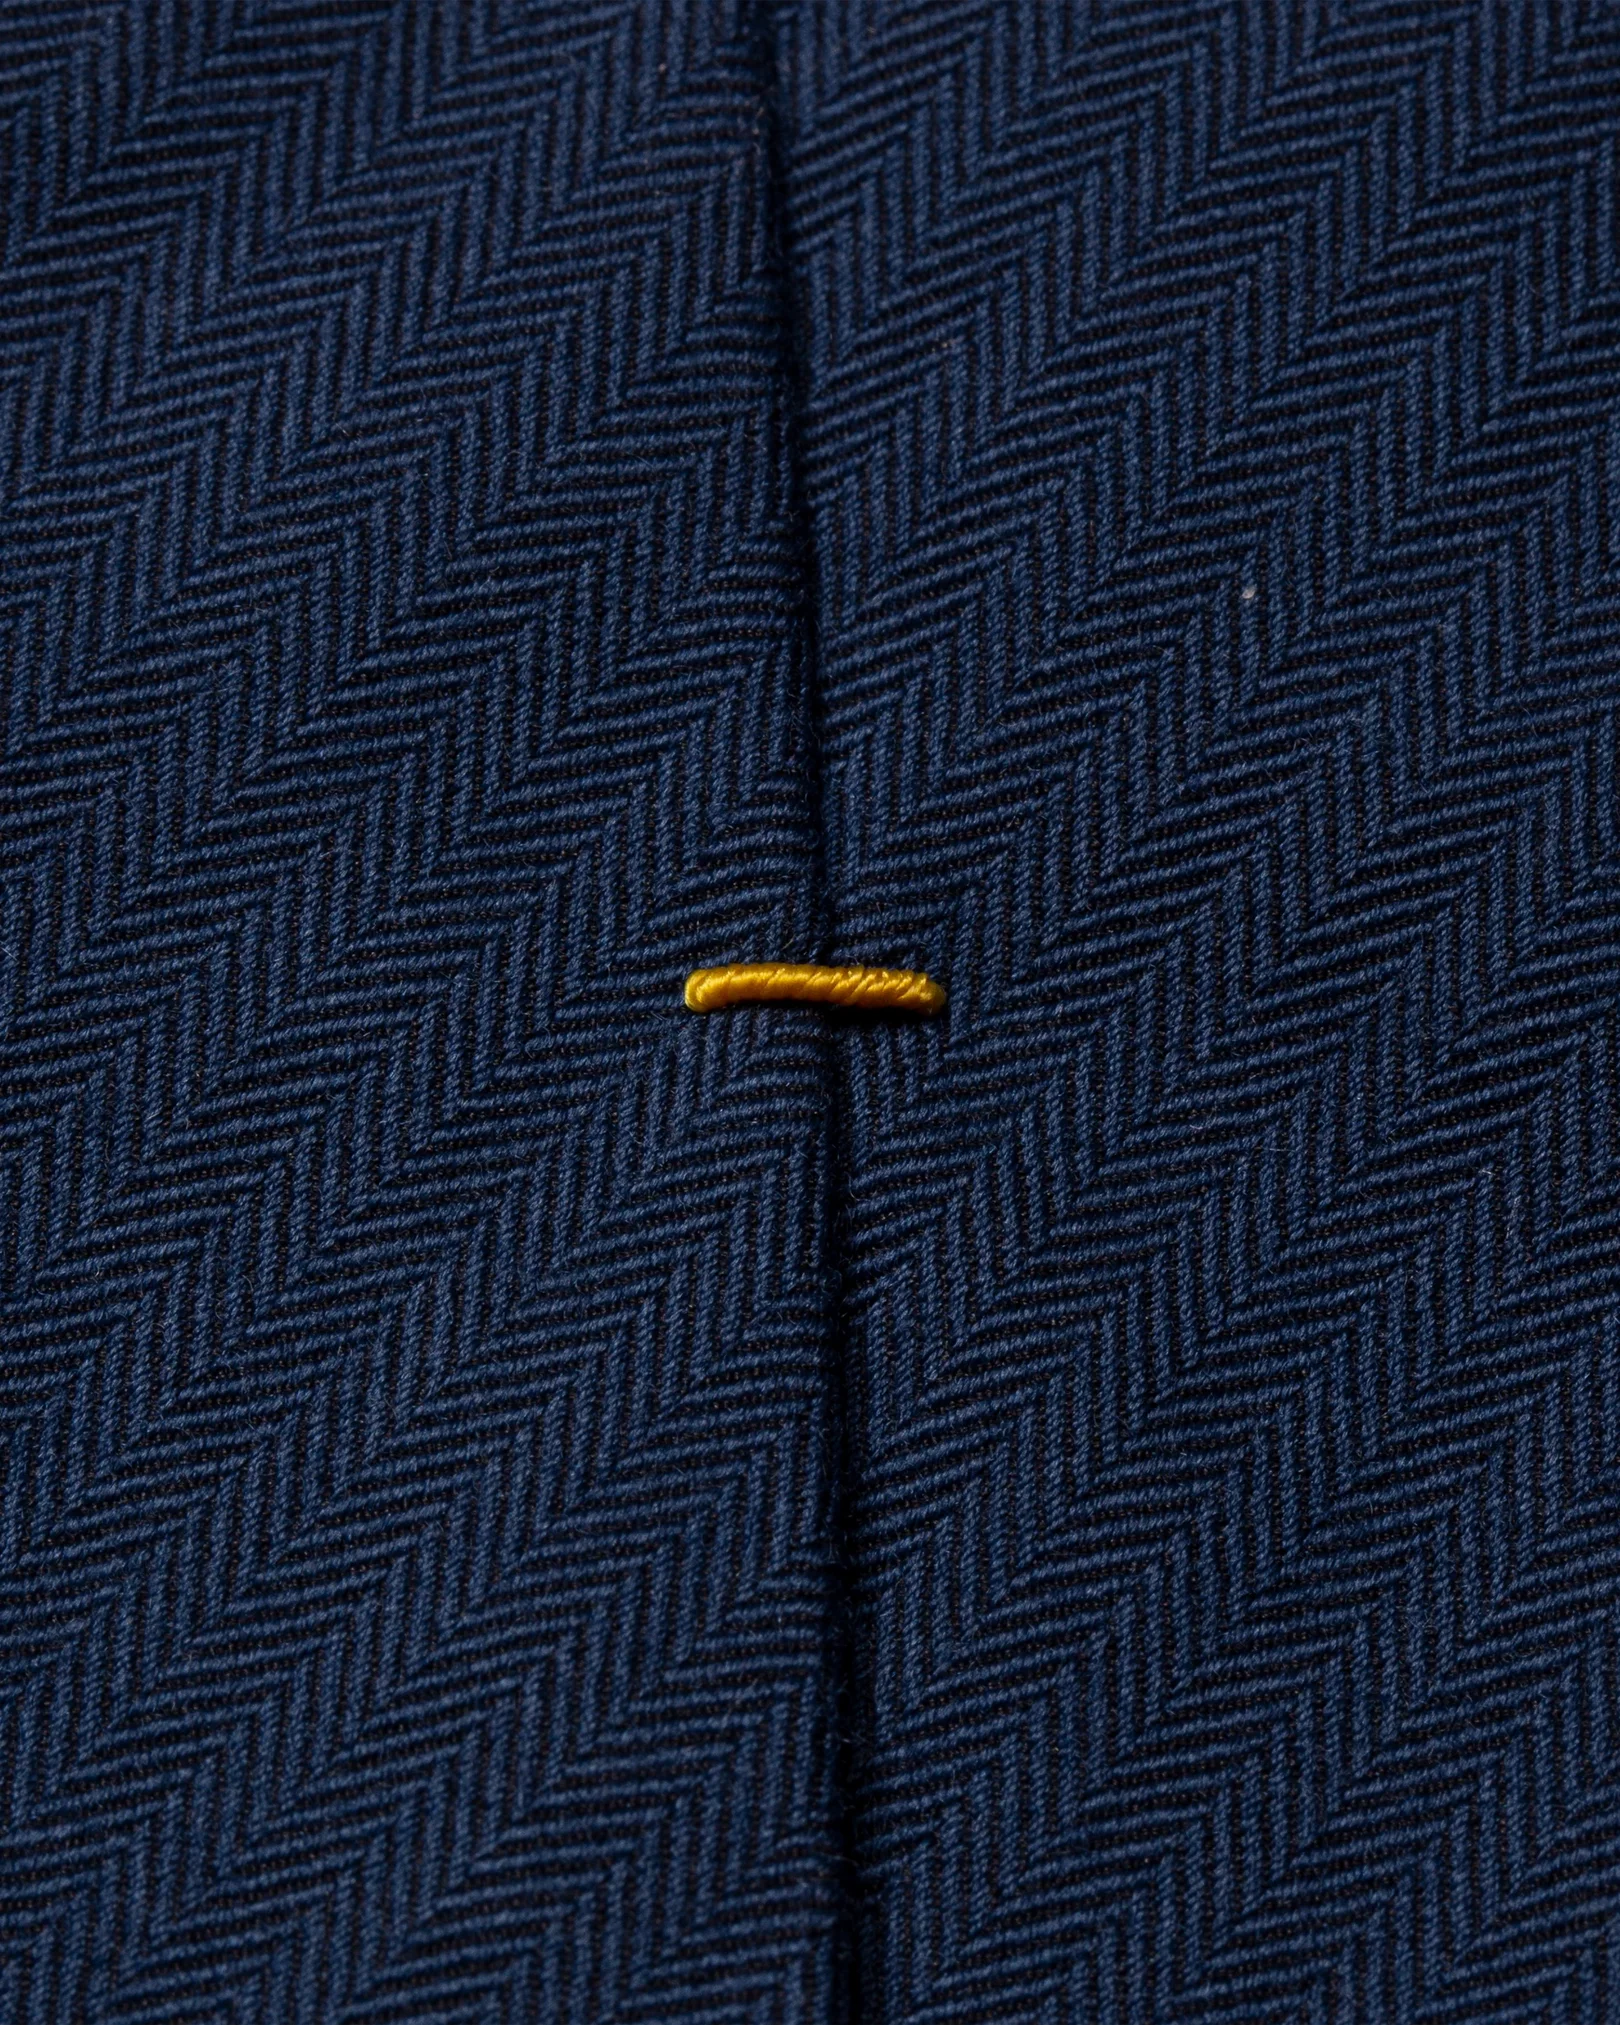 Eton - dark blue herringbone tie